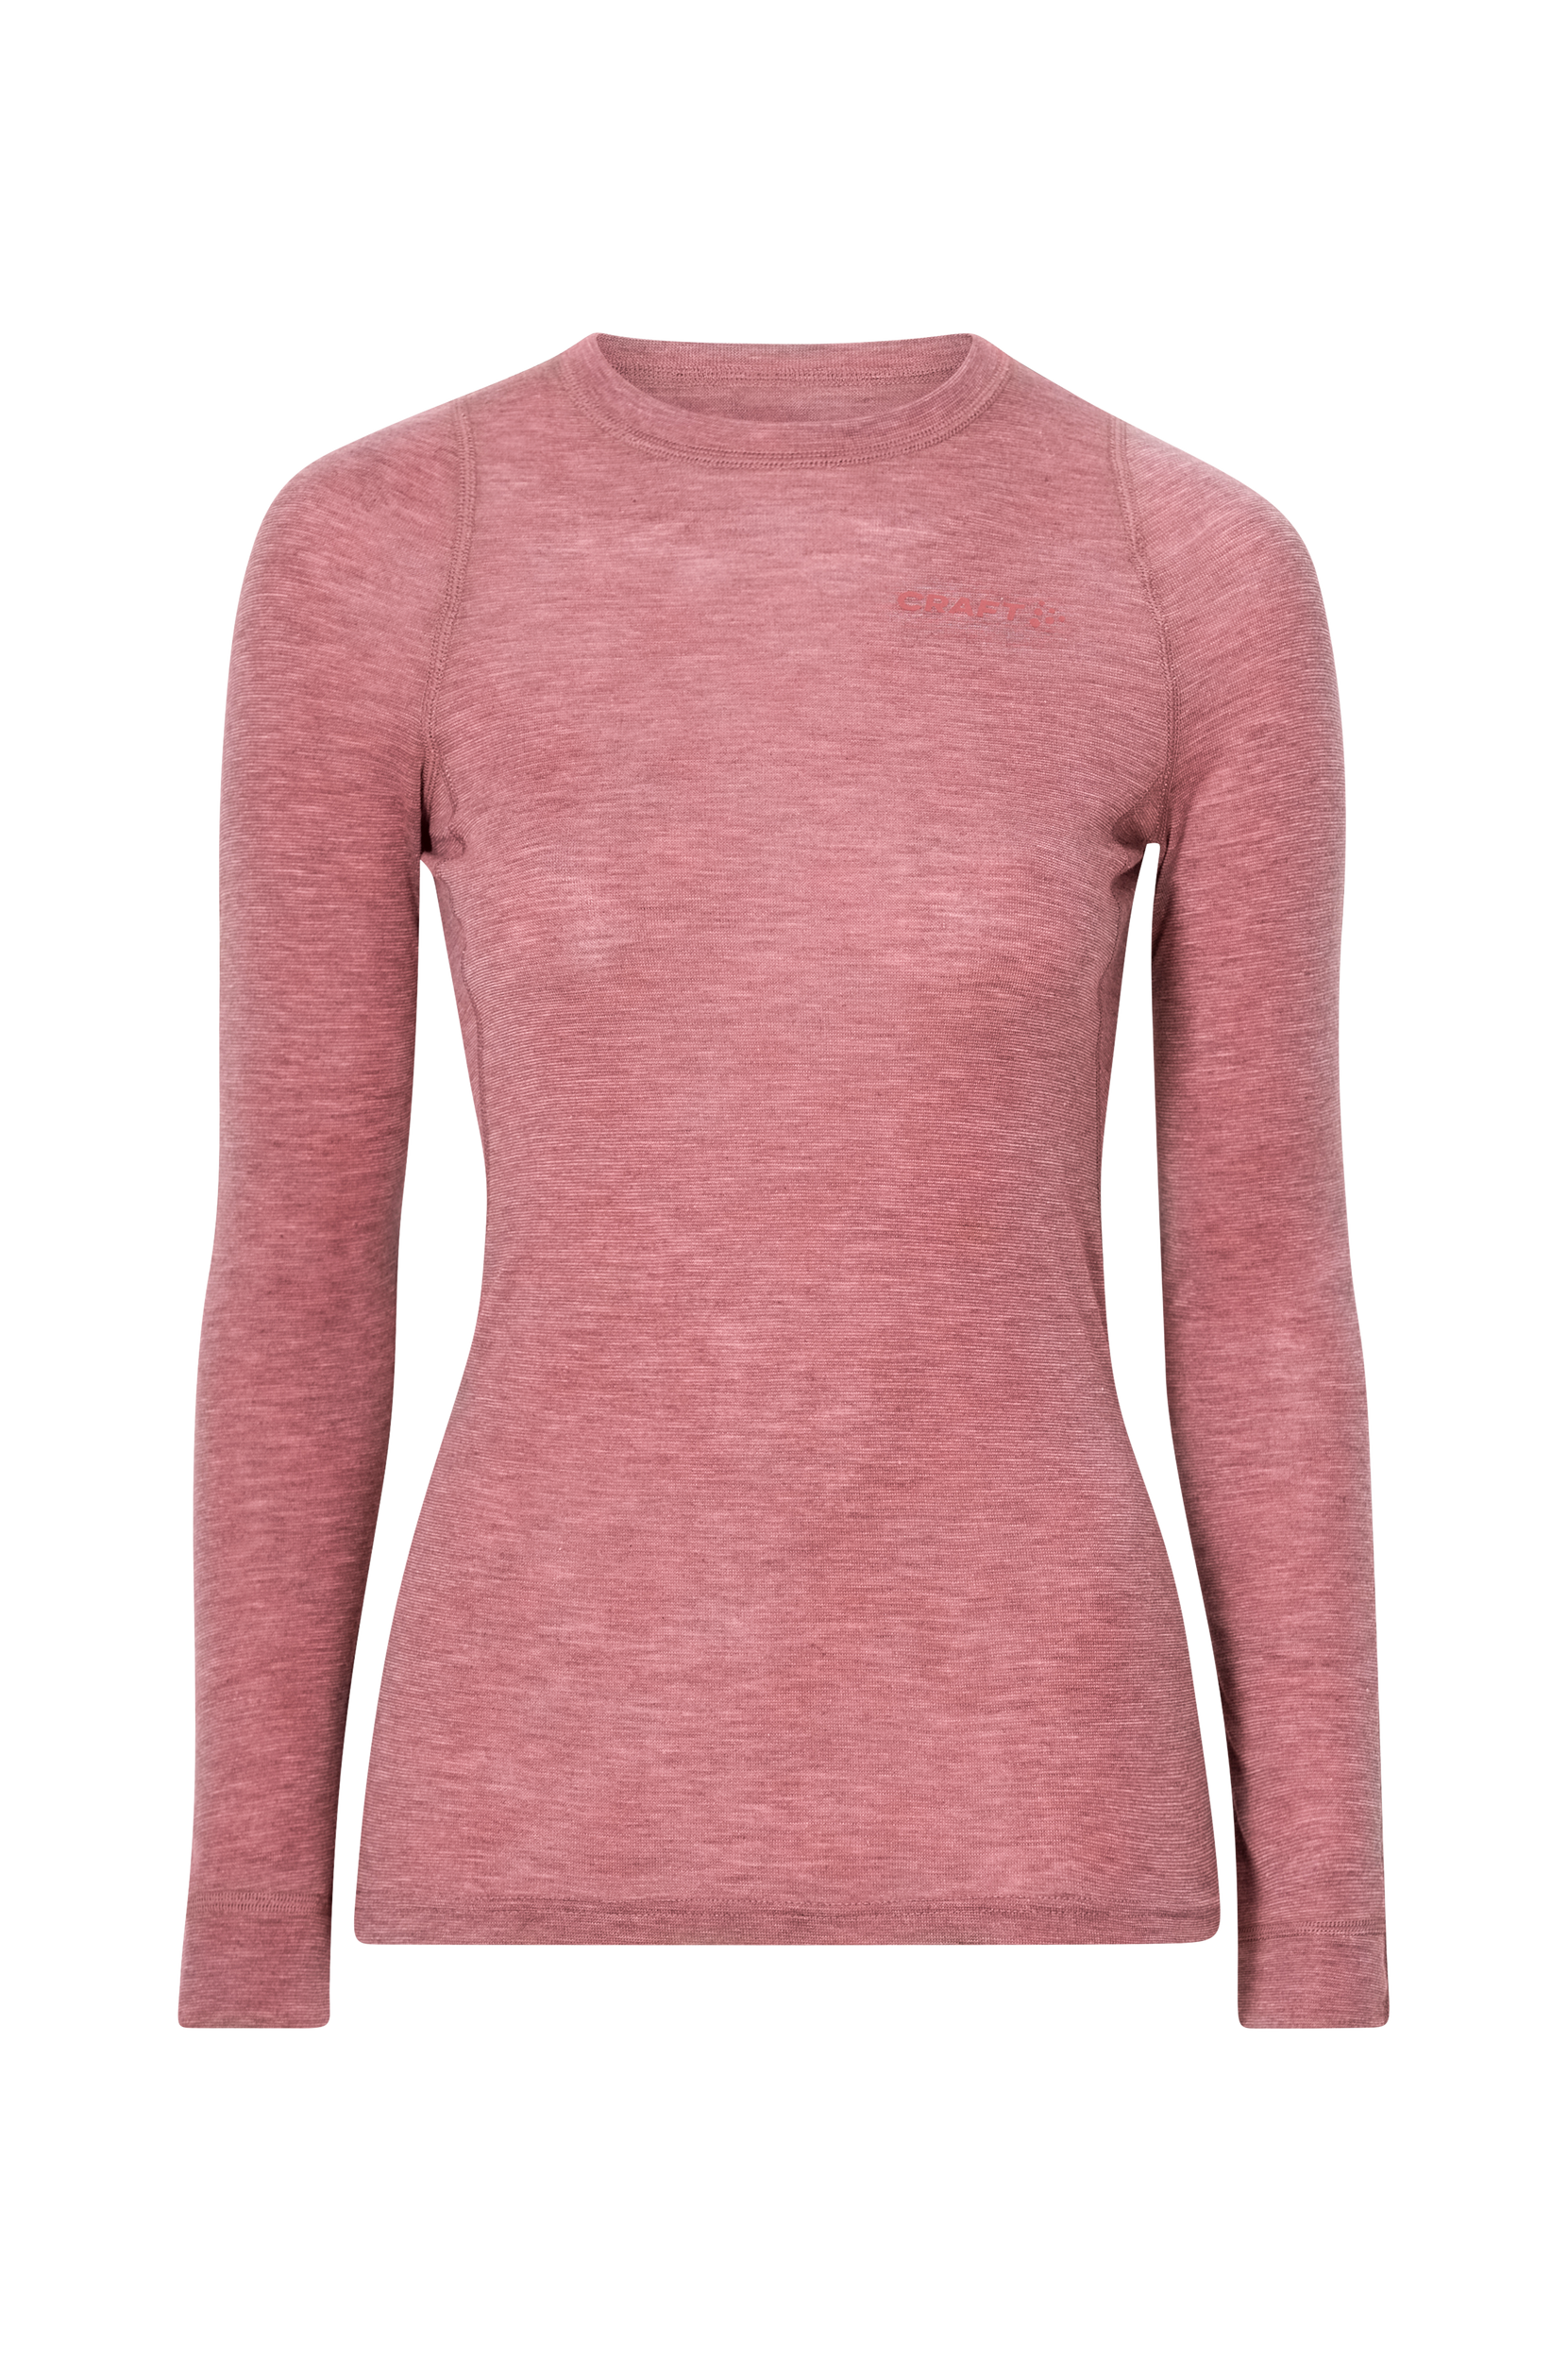 Craft Skiundertøj Core Wool Merino W - Rosa - 34 - Undertøj - Tøj til kvinder (31277512)